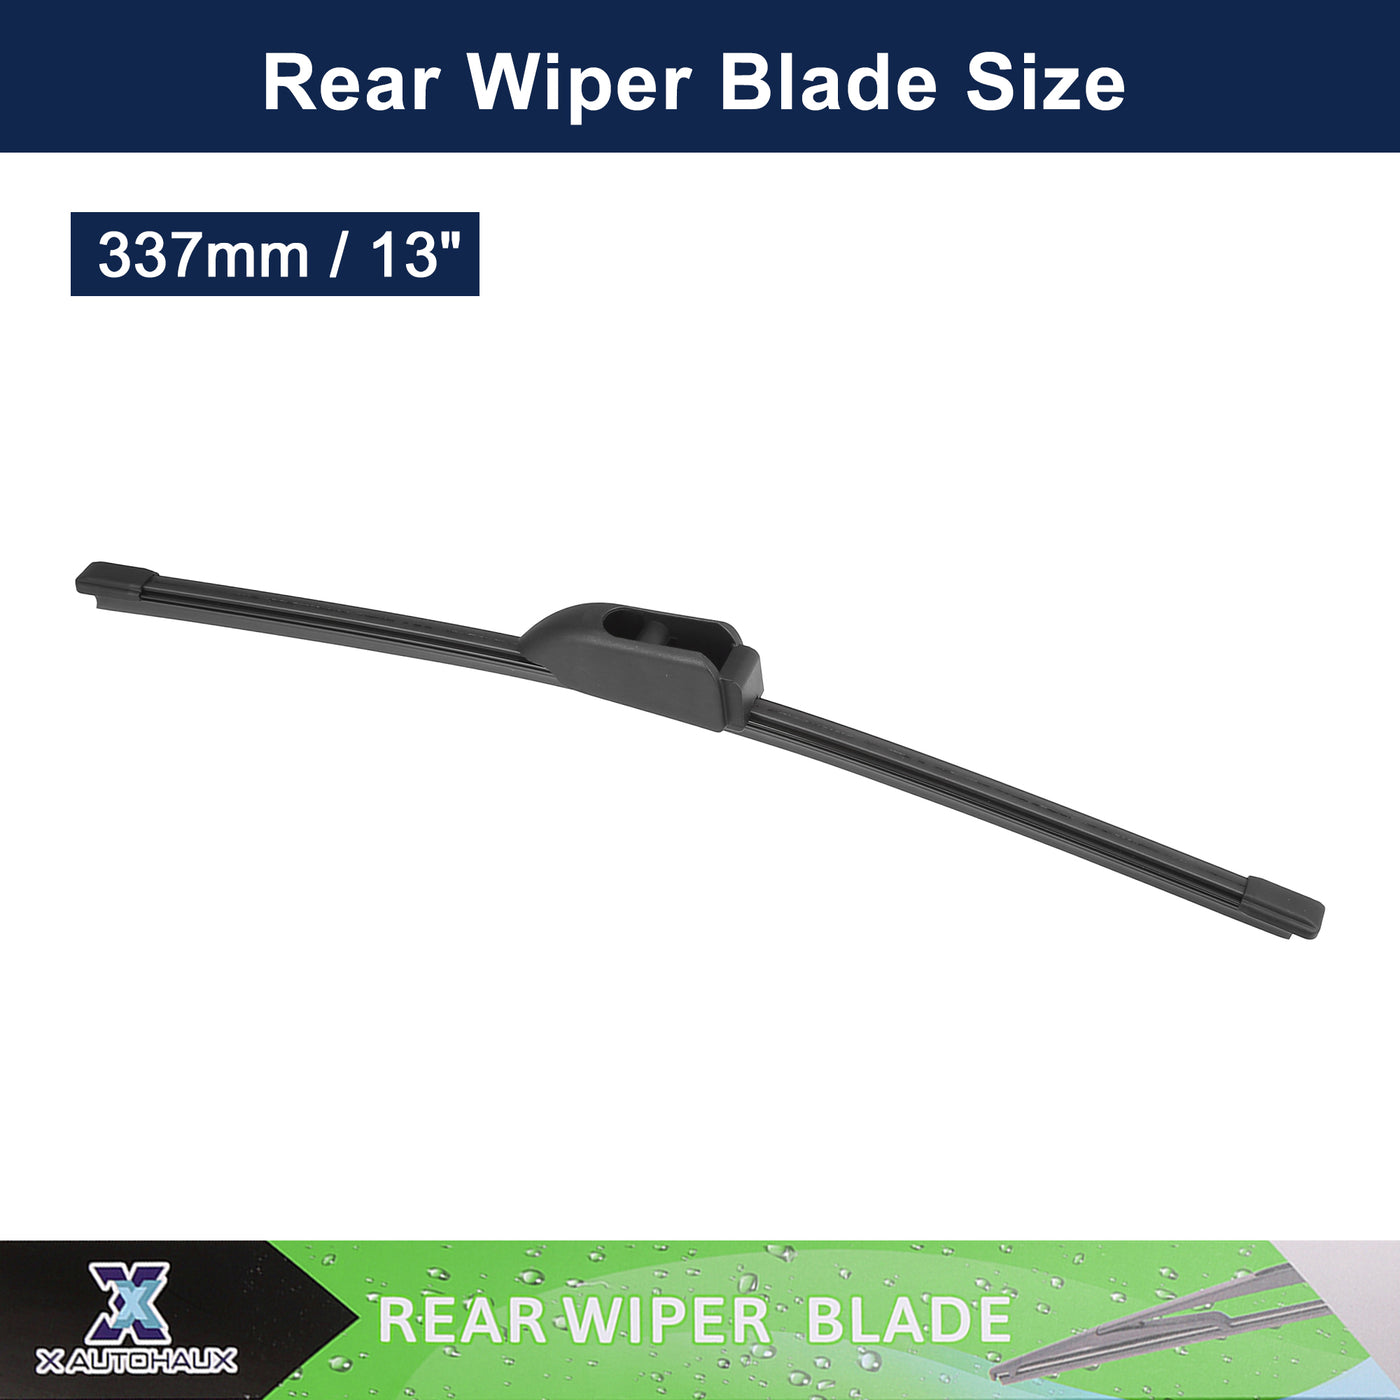 X AUTOHAUX Rear Windshield Wiper Blade Replacement for Hyundai Elantra 2012-2017 for Hyundai Elantra GT 2012-2017 for Kia Optima 2015-2018